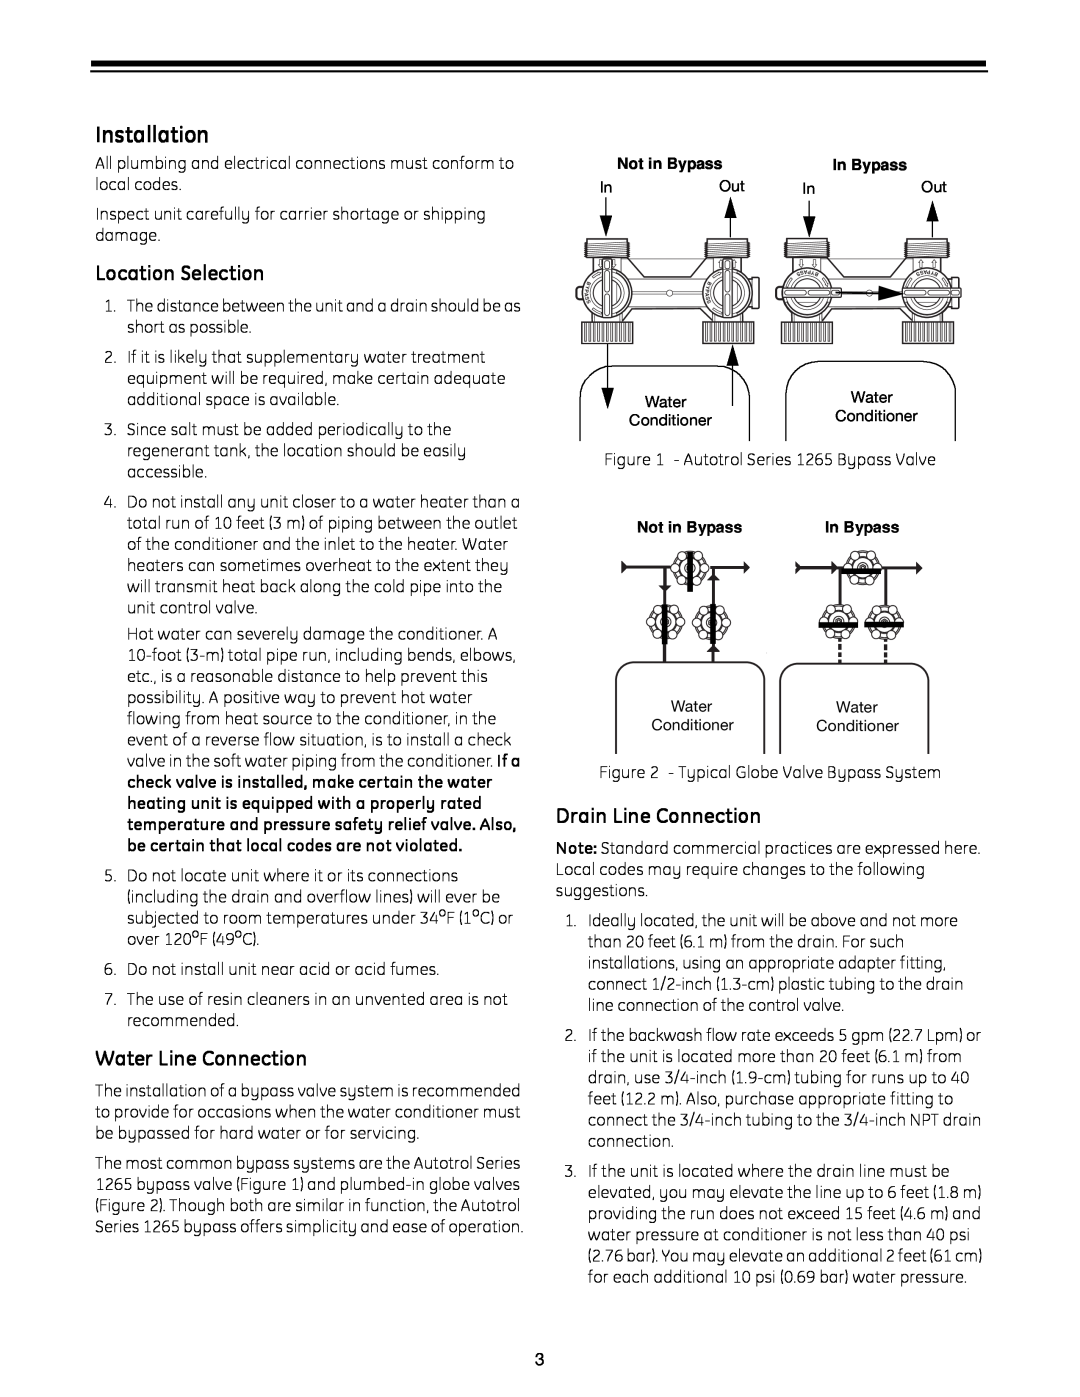 GE 960 Series manual Installation, Location Selection, Water Line Connection, Drain Line Connection 